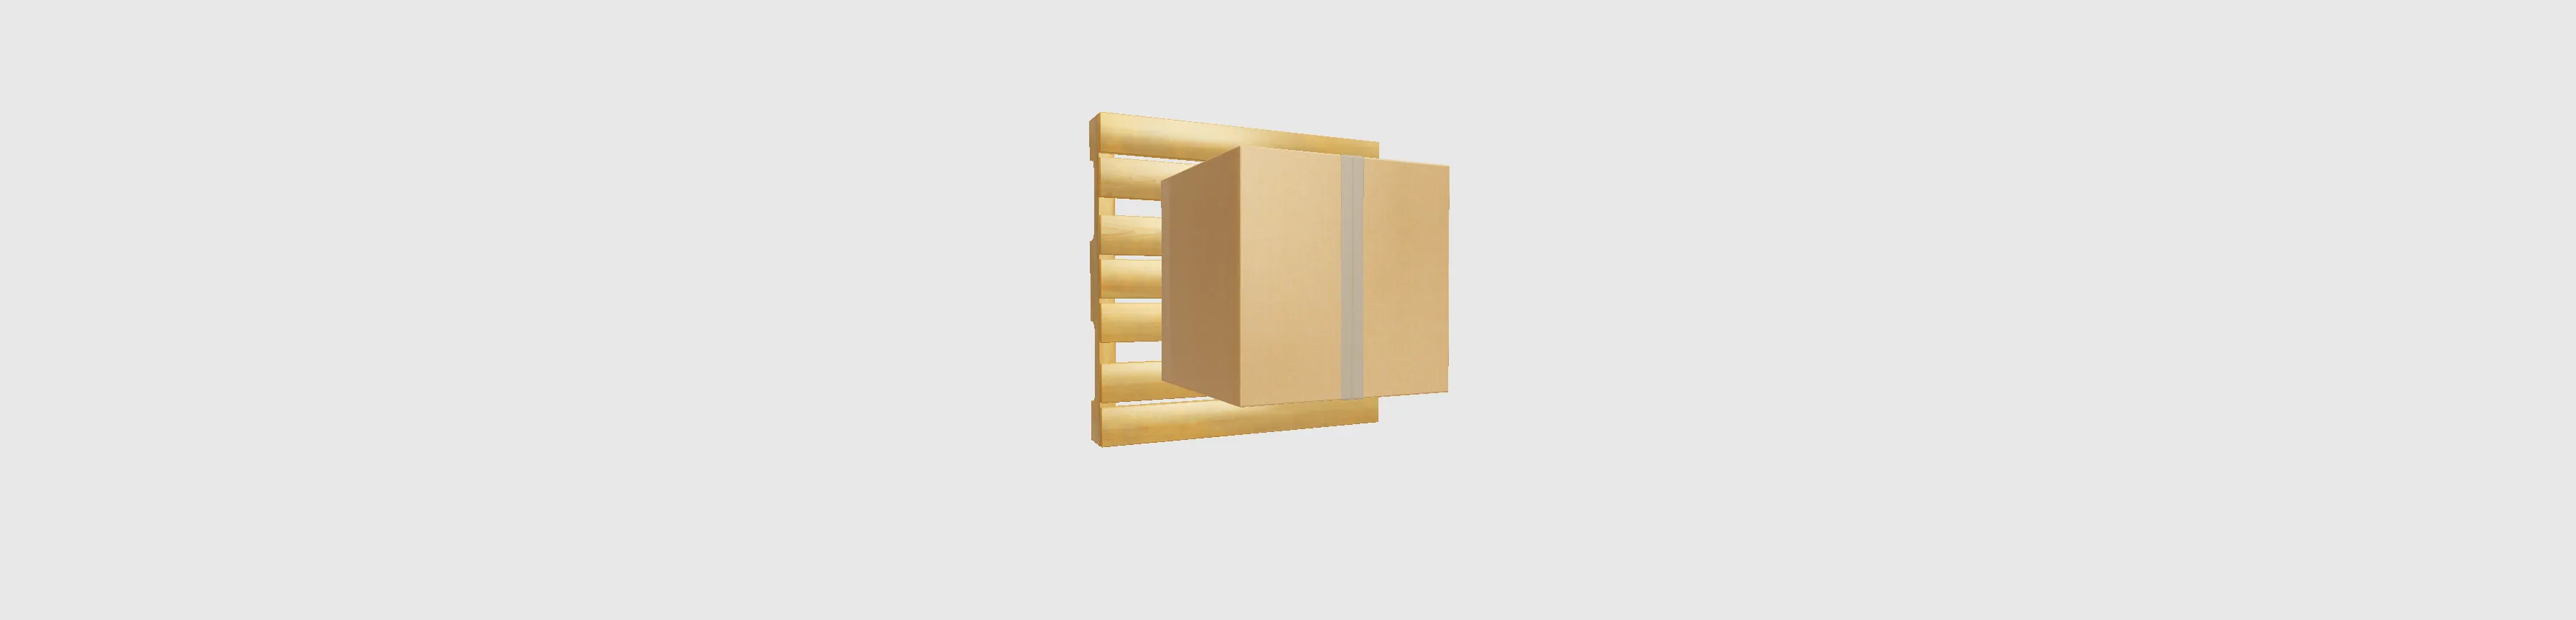 cardboard box on palette l1